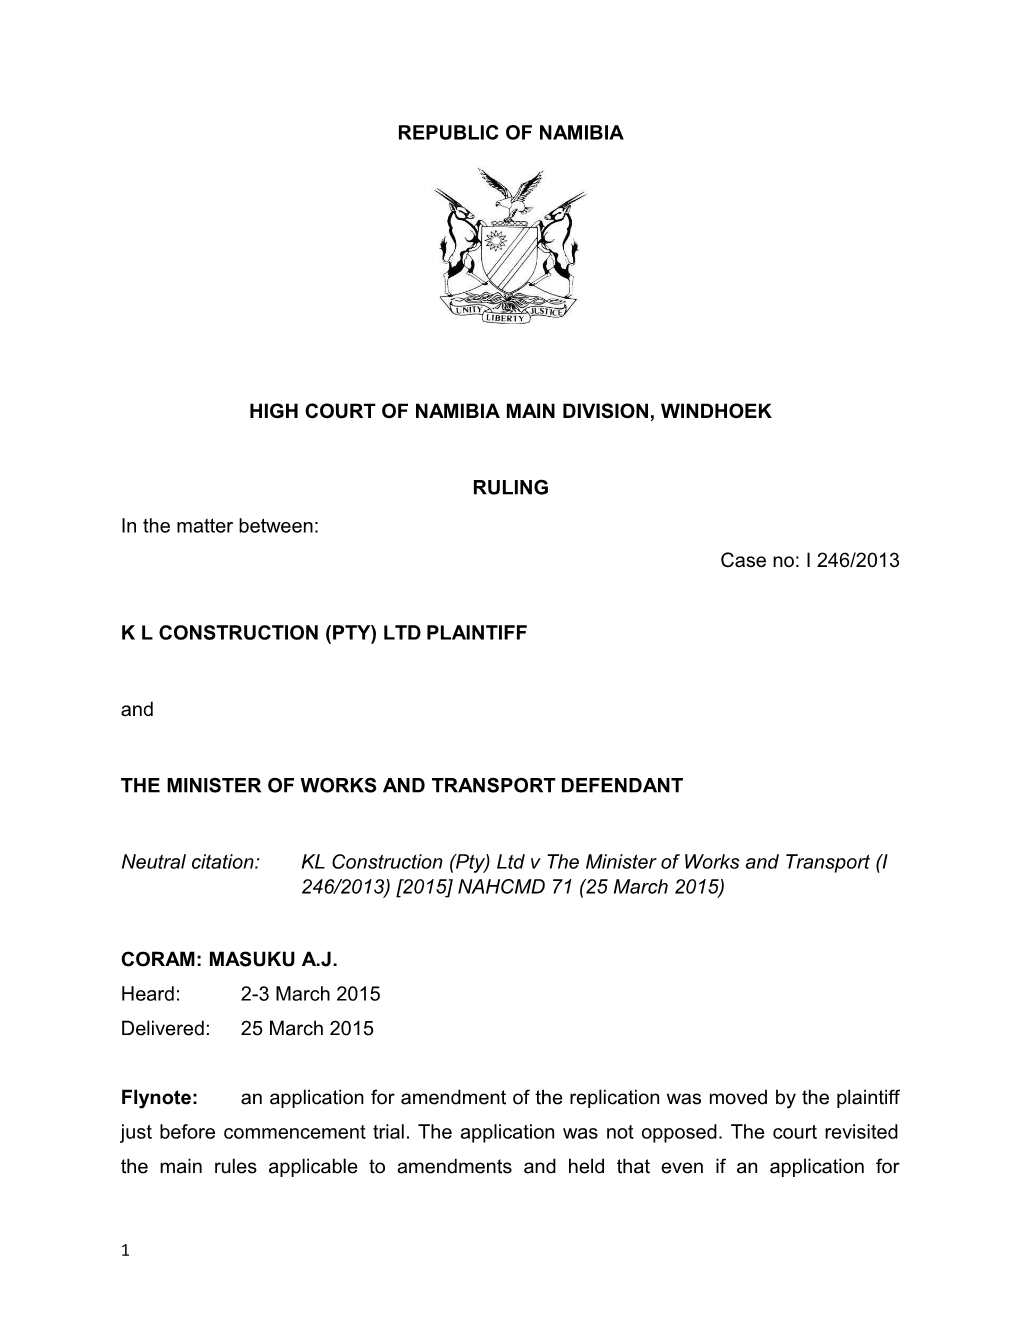 KL Construction (Pty) Ltd V the Minister of Works and Transport (I 246-2013) 2015 NAHCMD